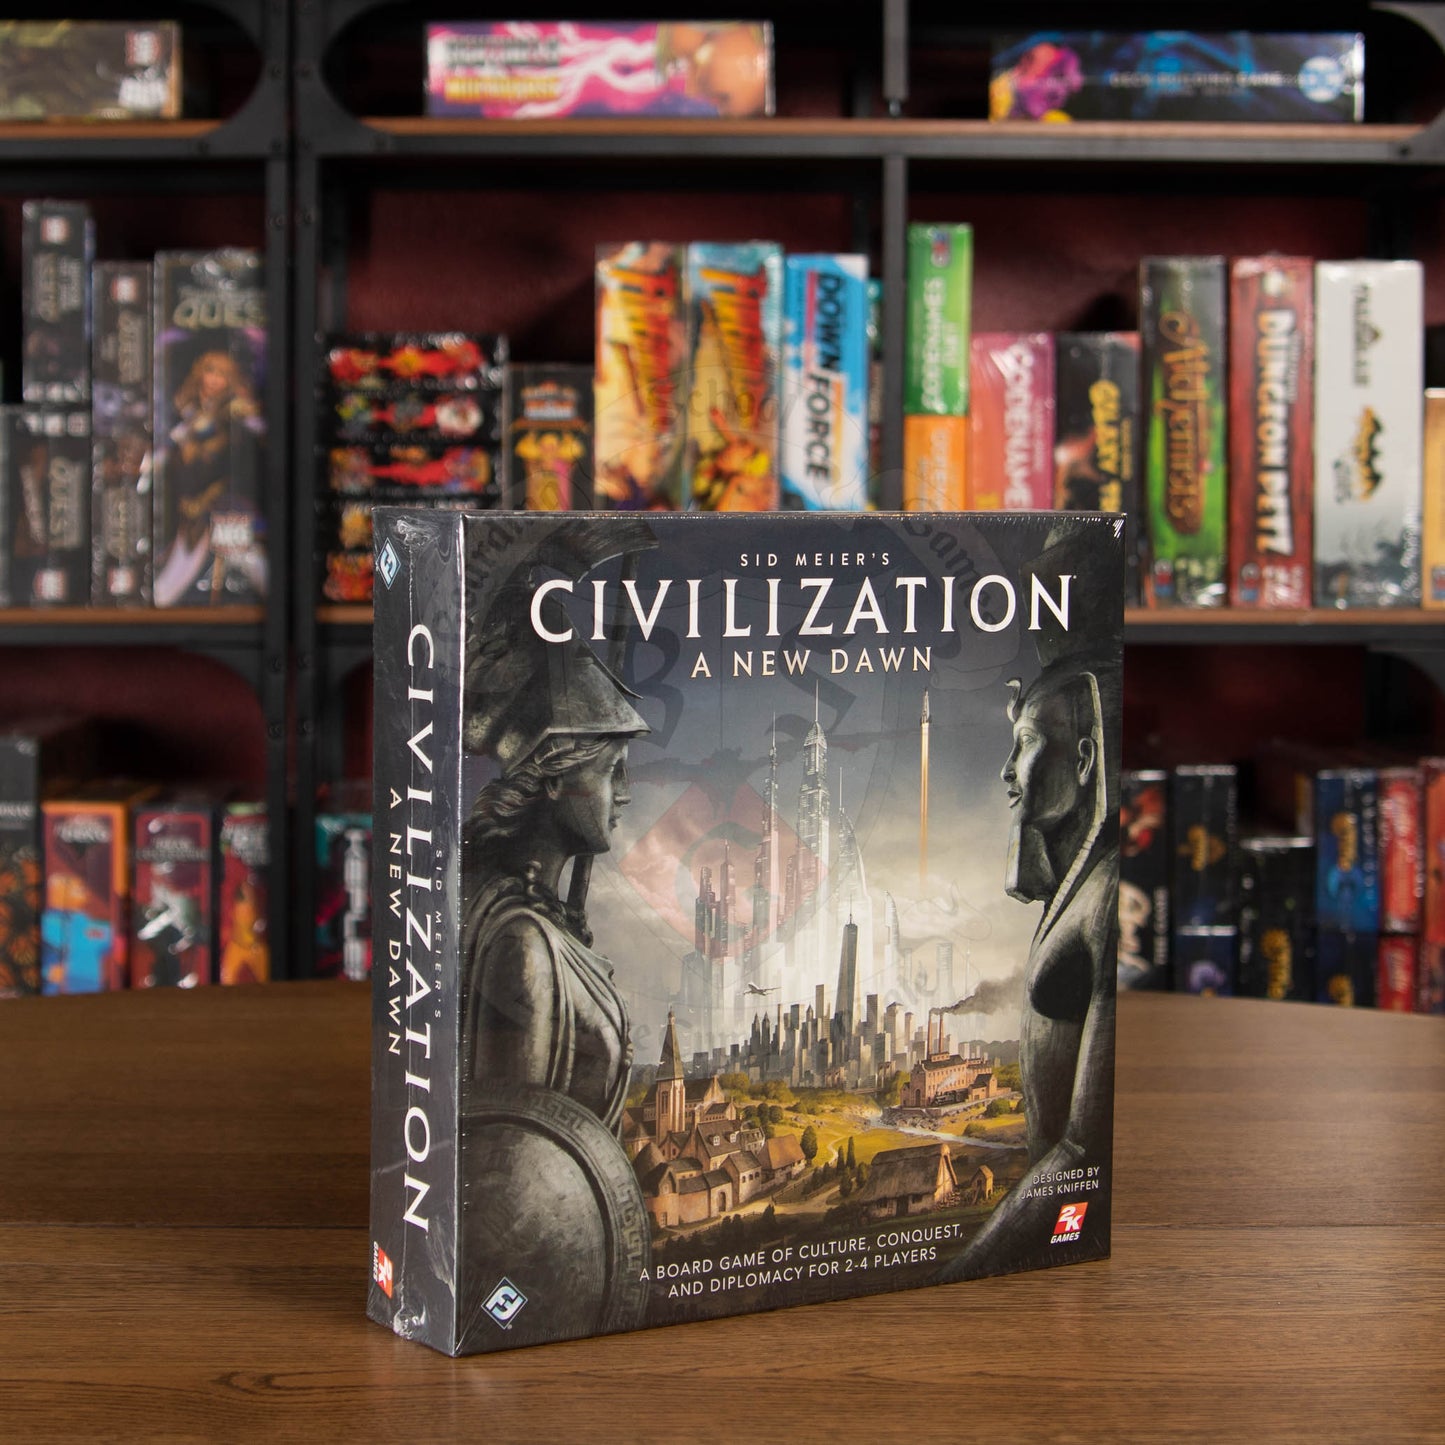 (BSG Certified USED) Sid Meier's Civilization: A New Dawn